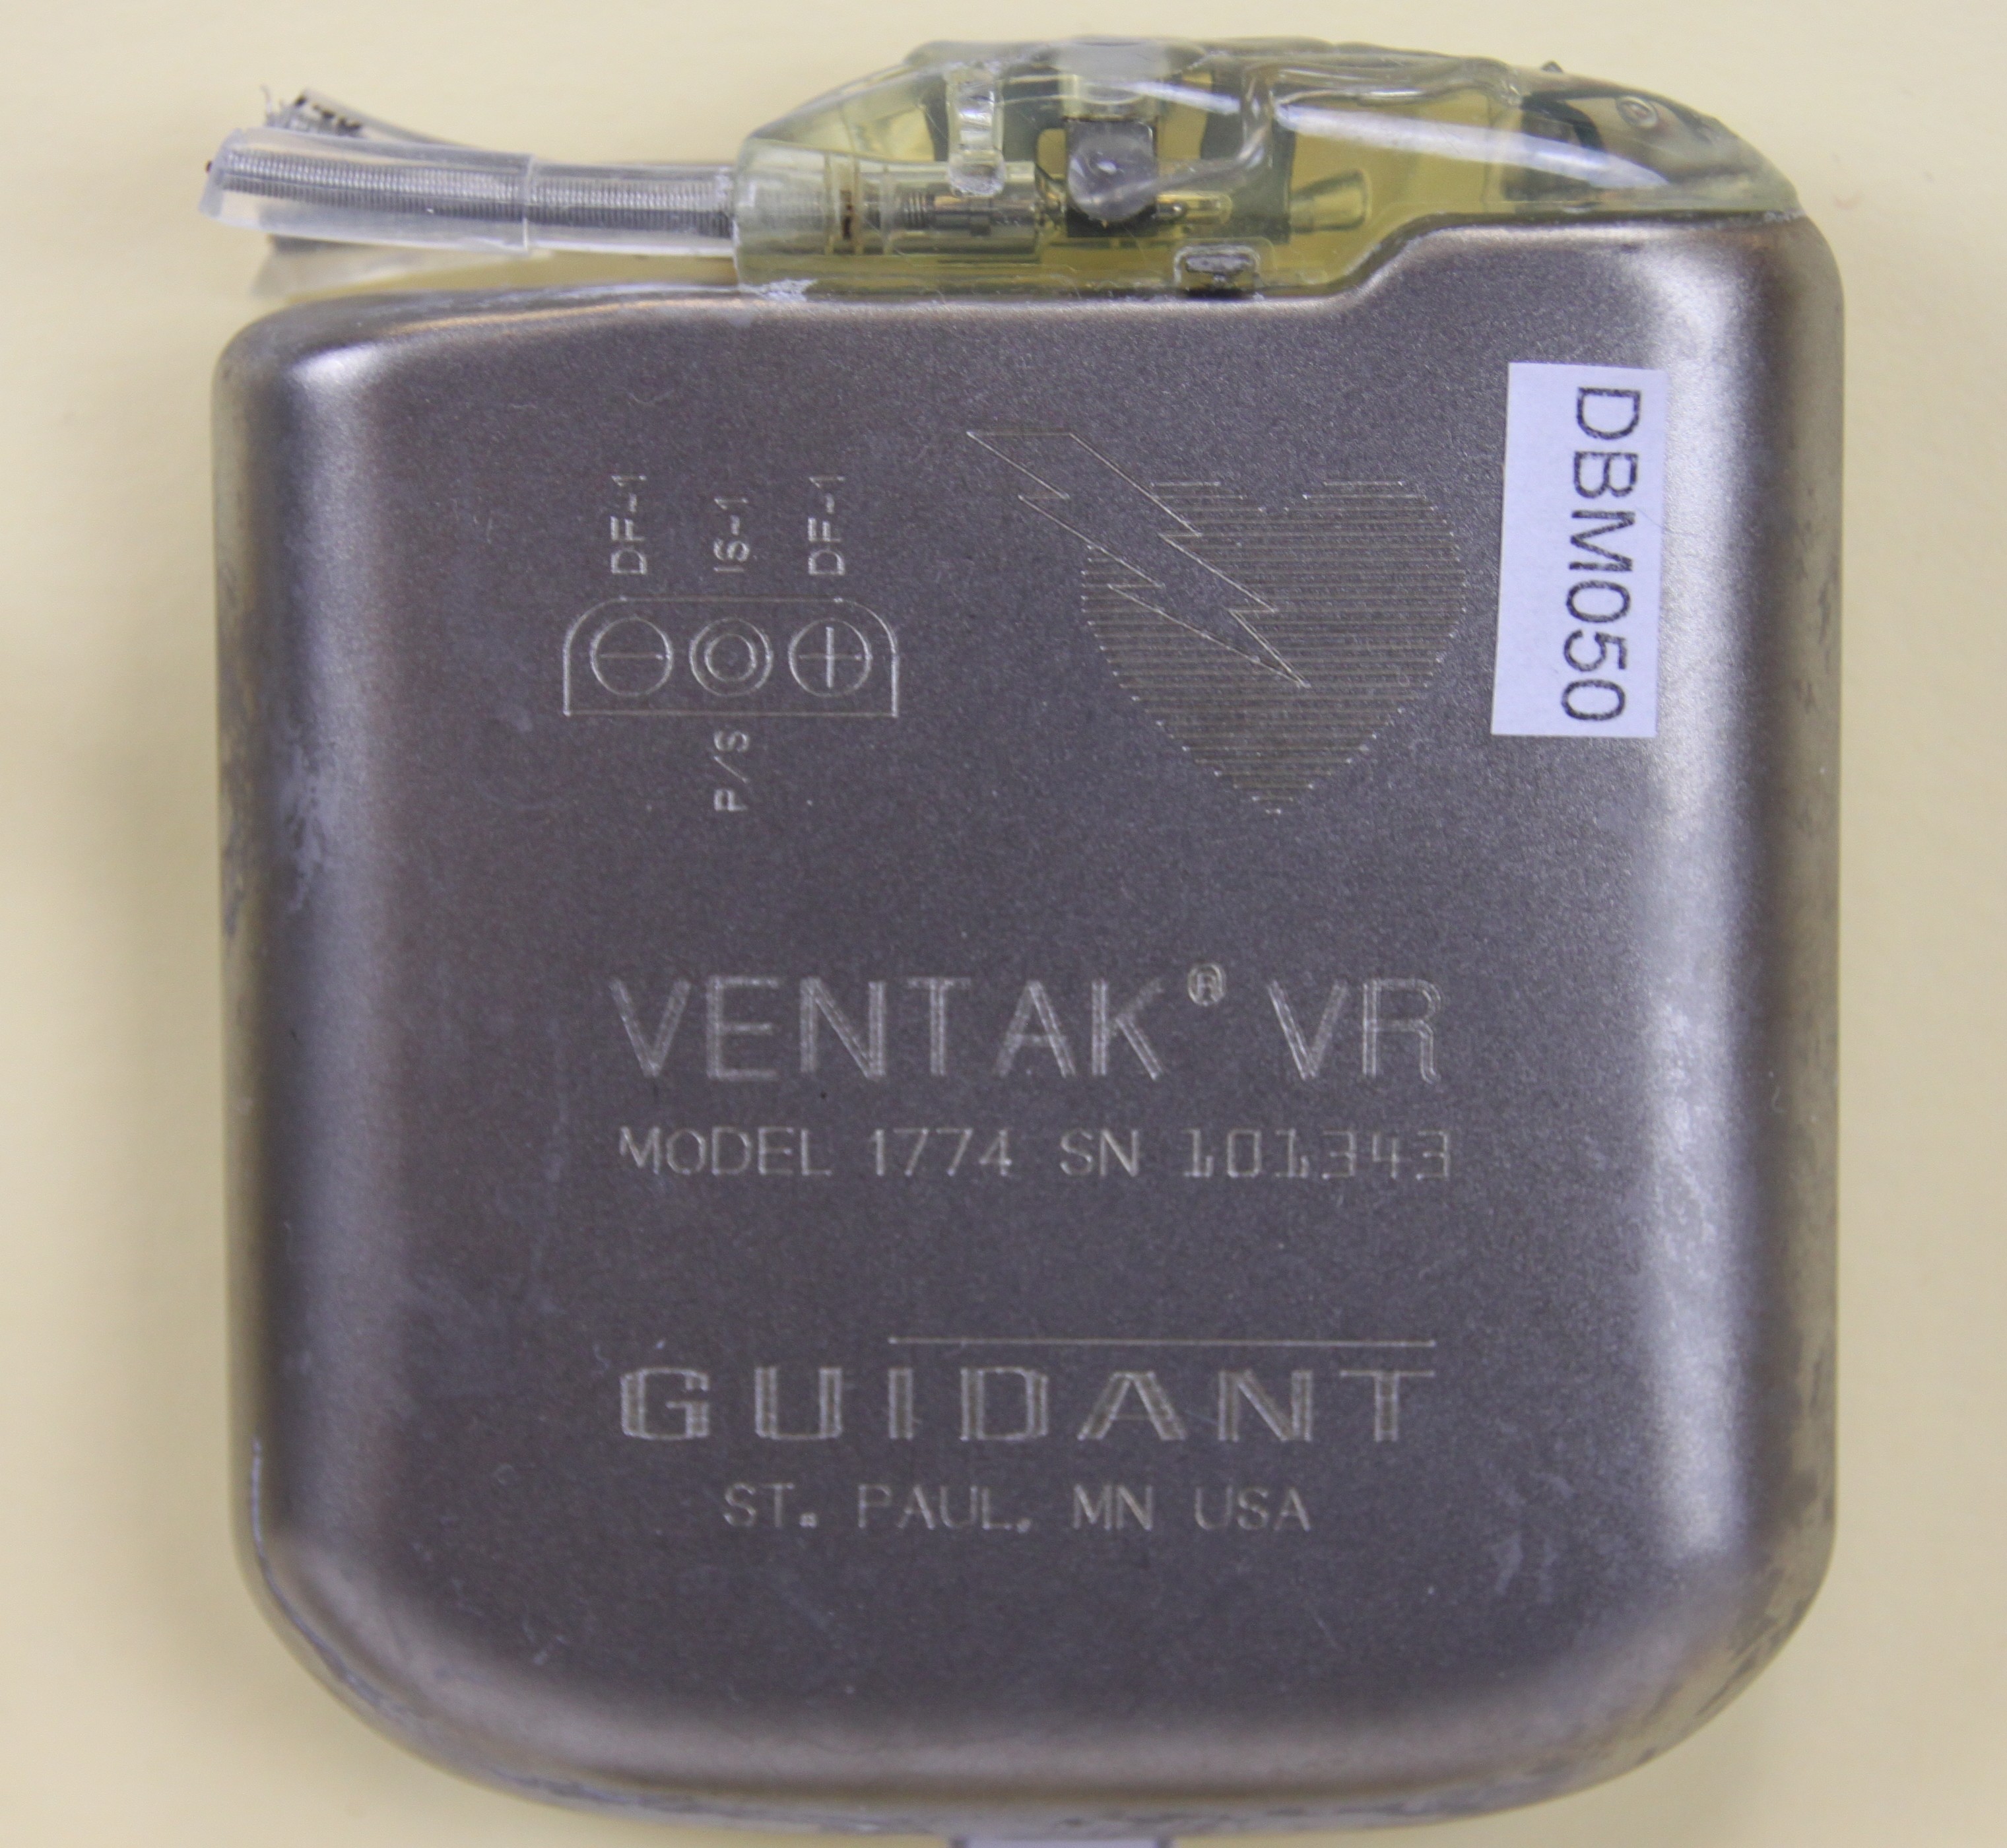 Herzschrittmacher-Implantat Gudant Ventac VR 1774 (Krankenhausmuseum Bielefeld e.V. CC BY-NC-SA)